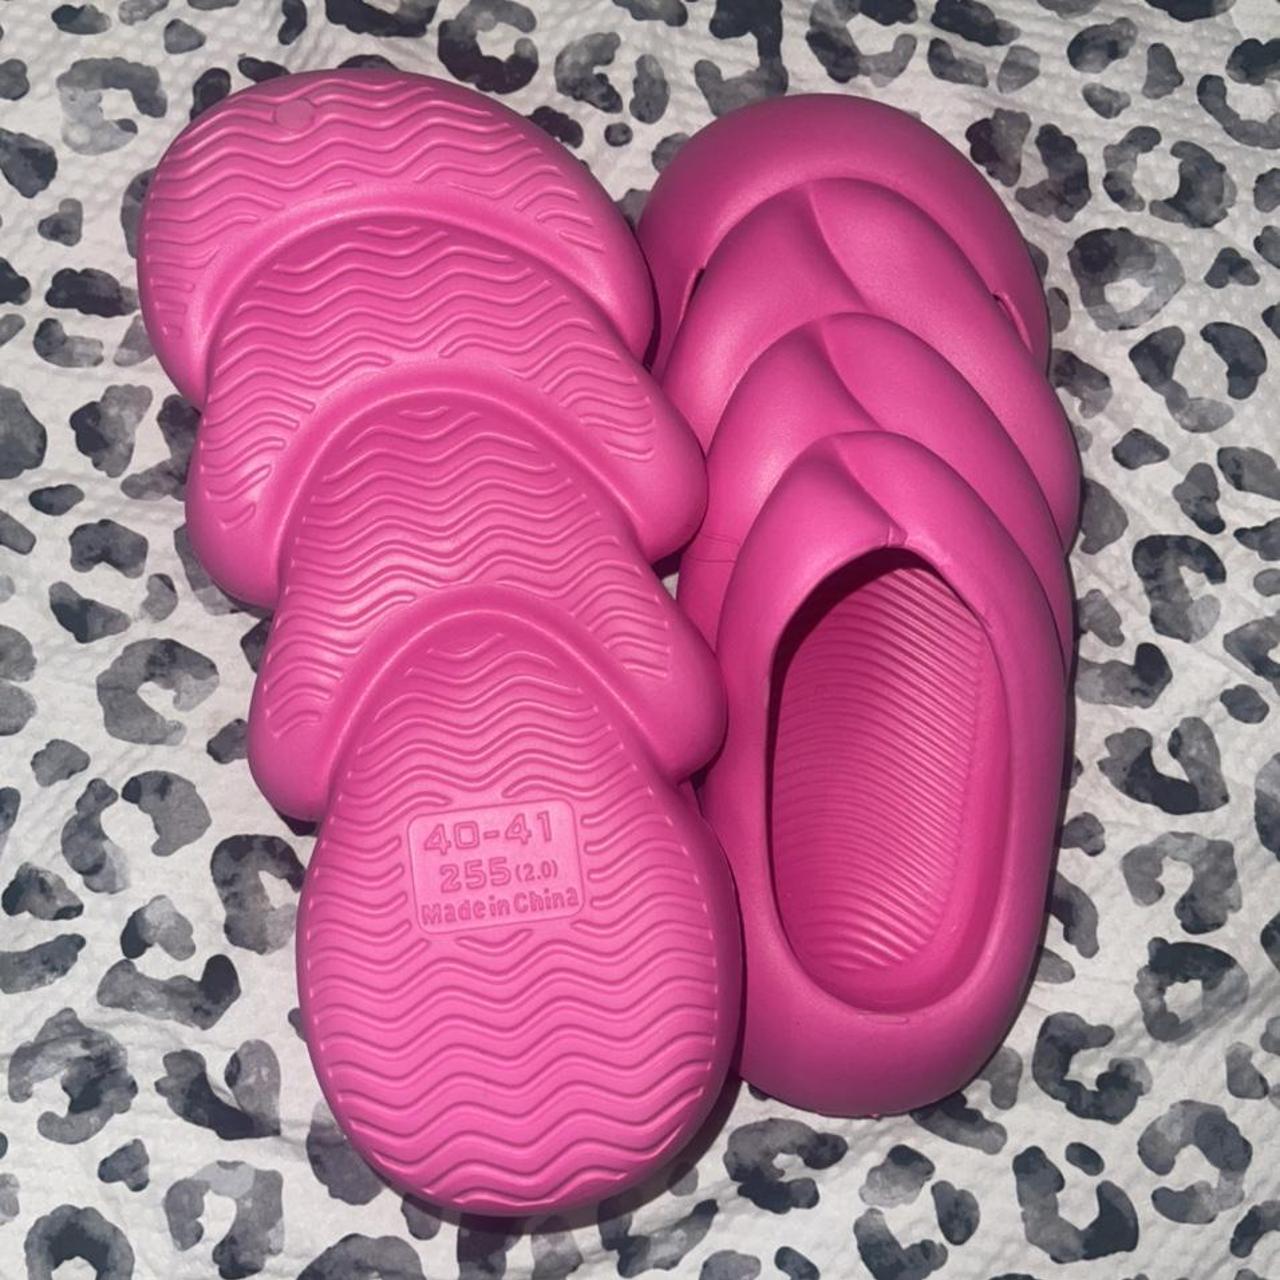 Yeezy Women's Pink Slides (3)